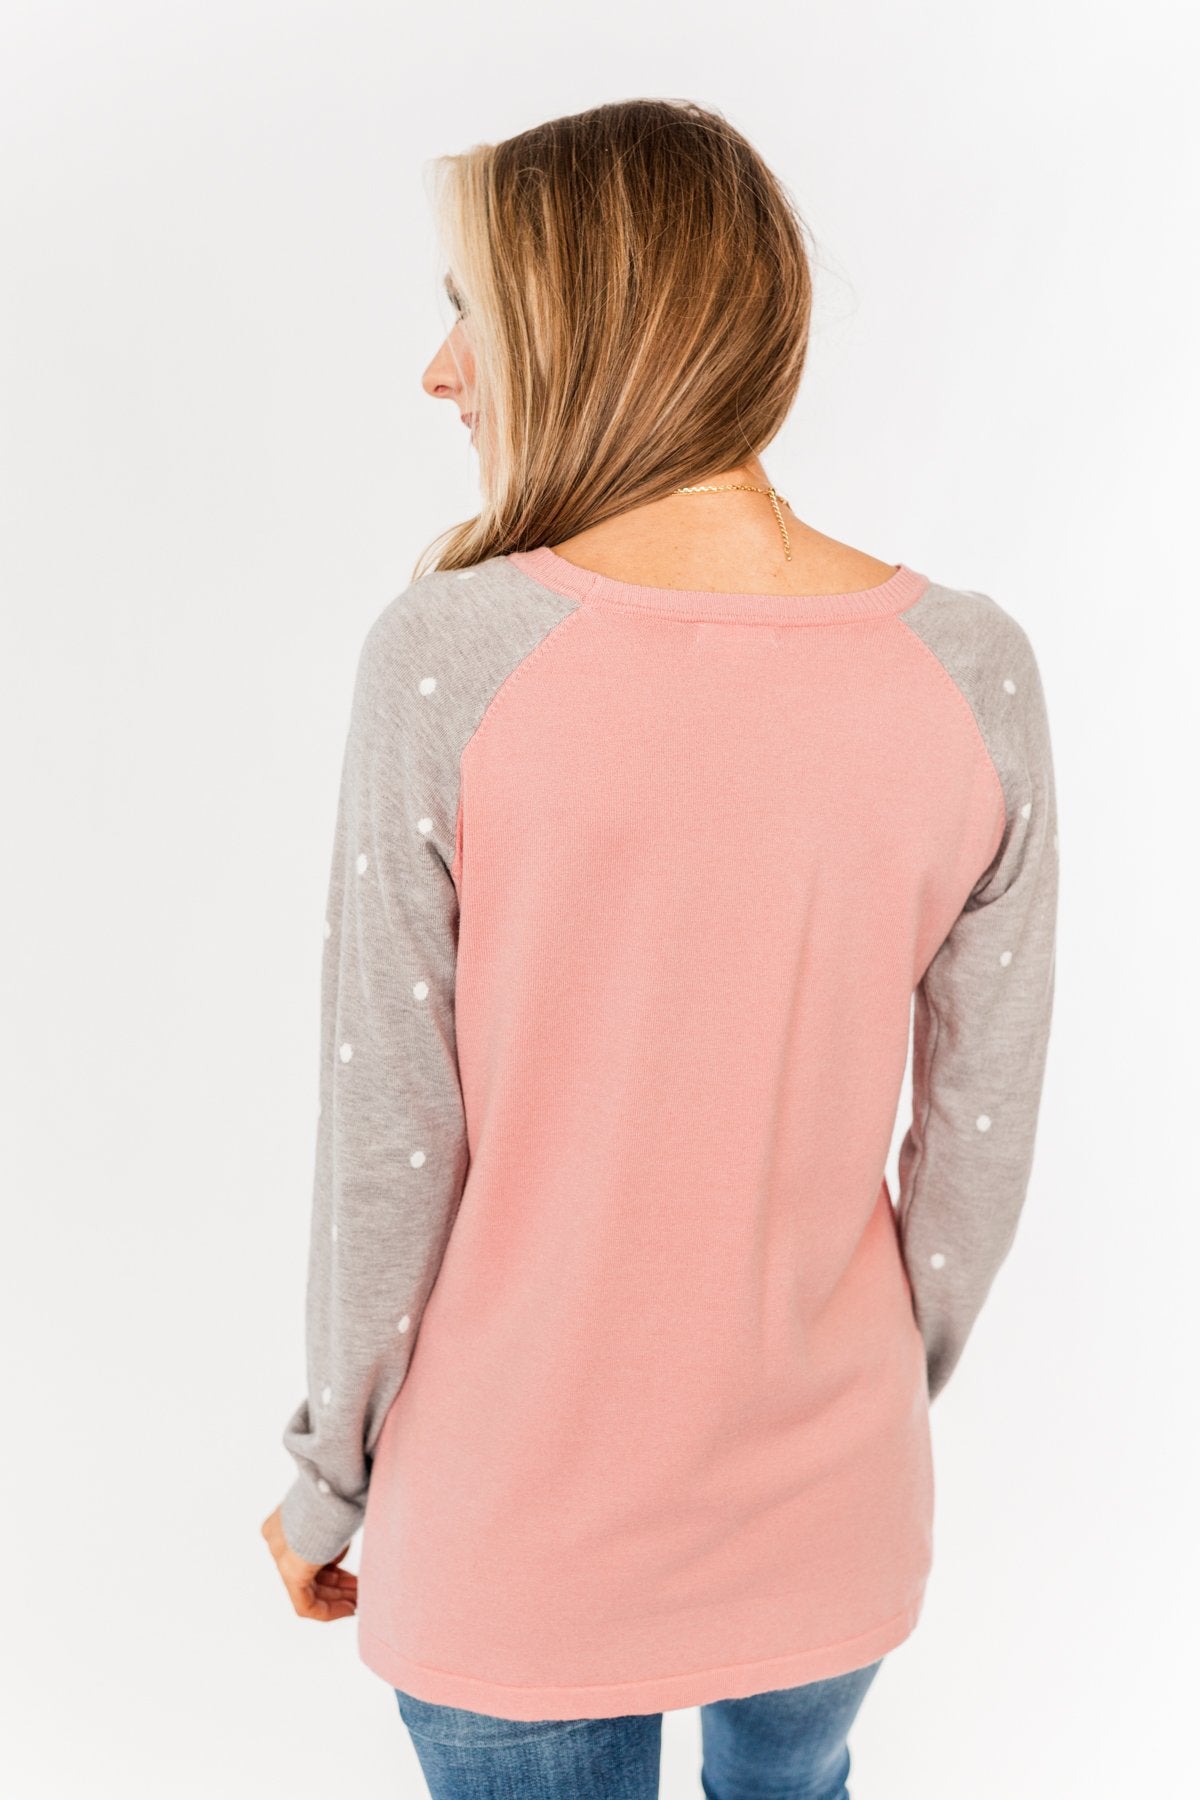 Warm Wishes Lightweight Knit Sweater- Grey & Pink